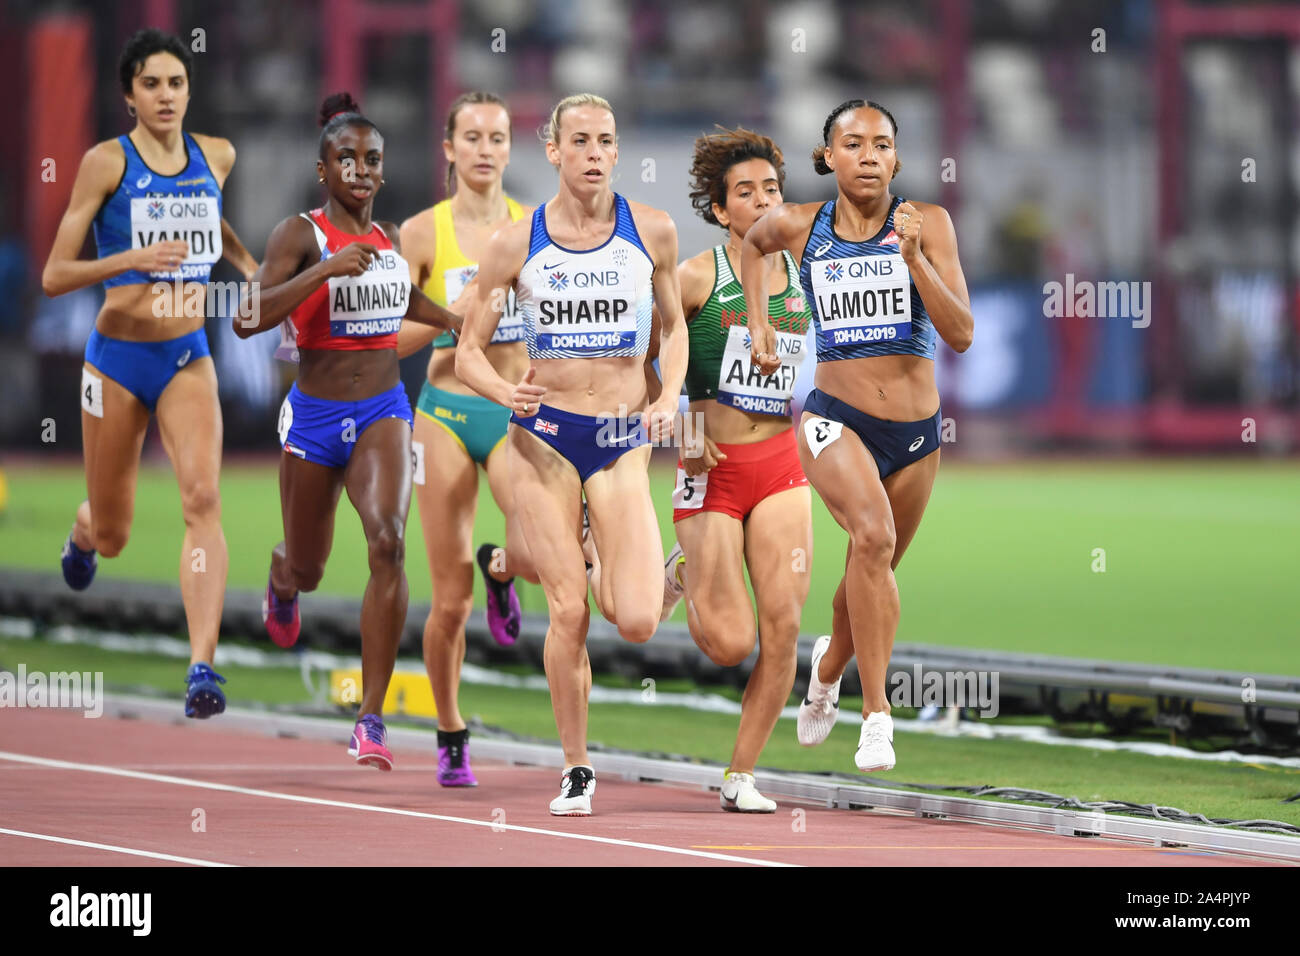 Renelle Lamothe (France), Lynsey Sharp (Great Britain), Rose Mary Almanza (Cuba). 800 Metres Women, heats. IAAF World Athletics Championships, Doha 2019 Stock Photo